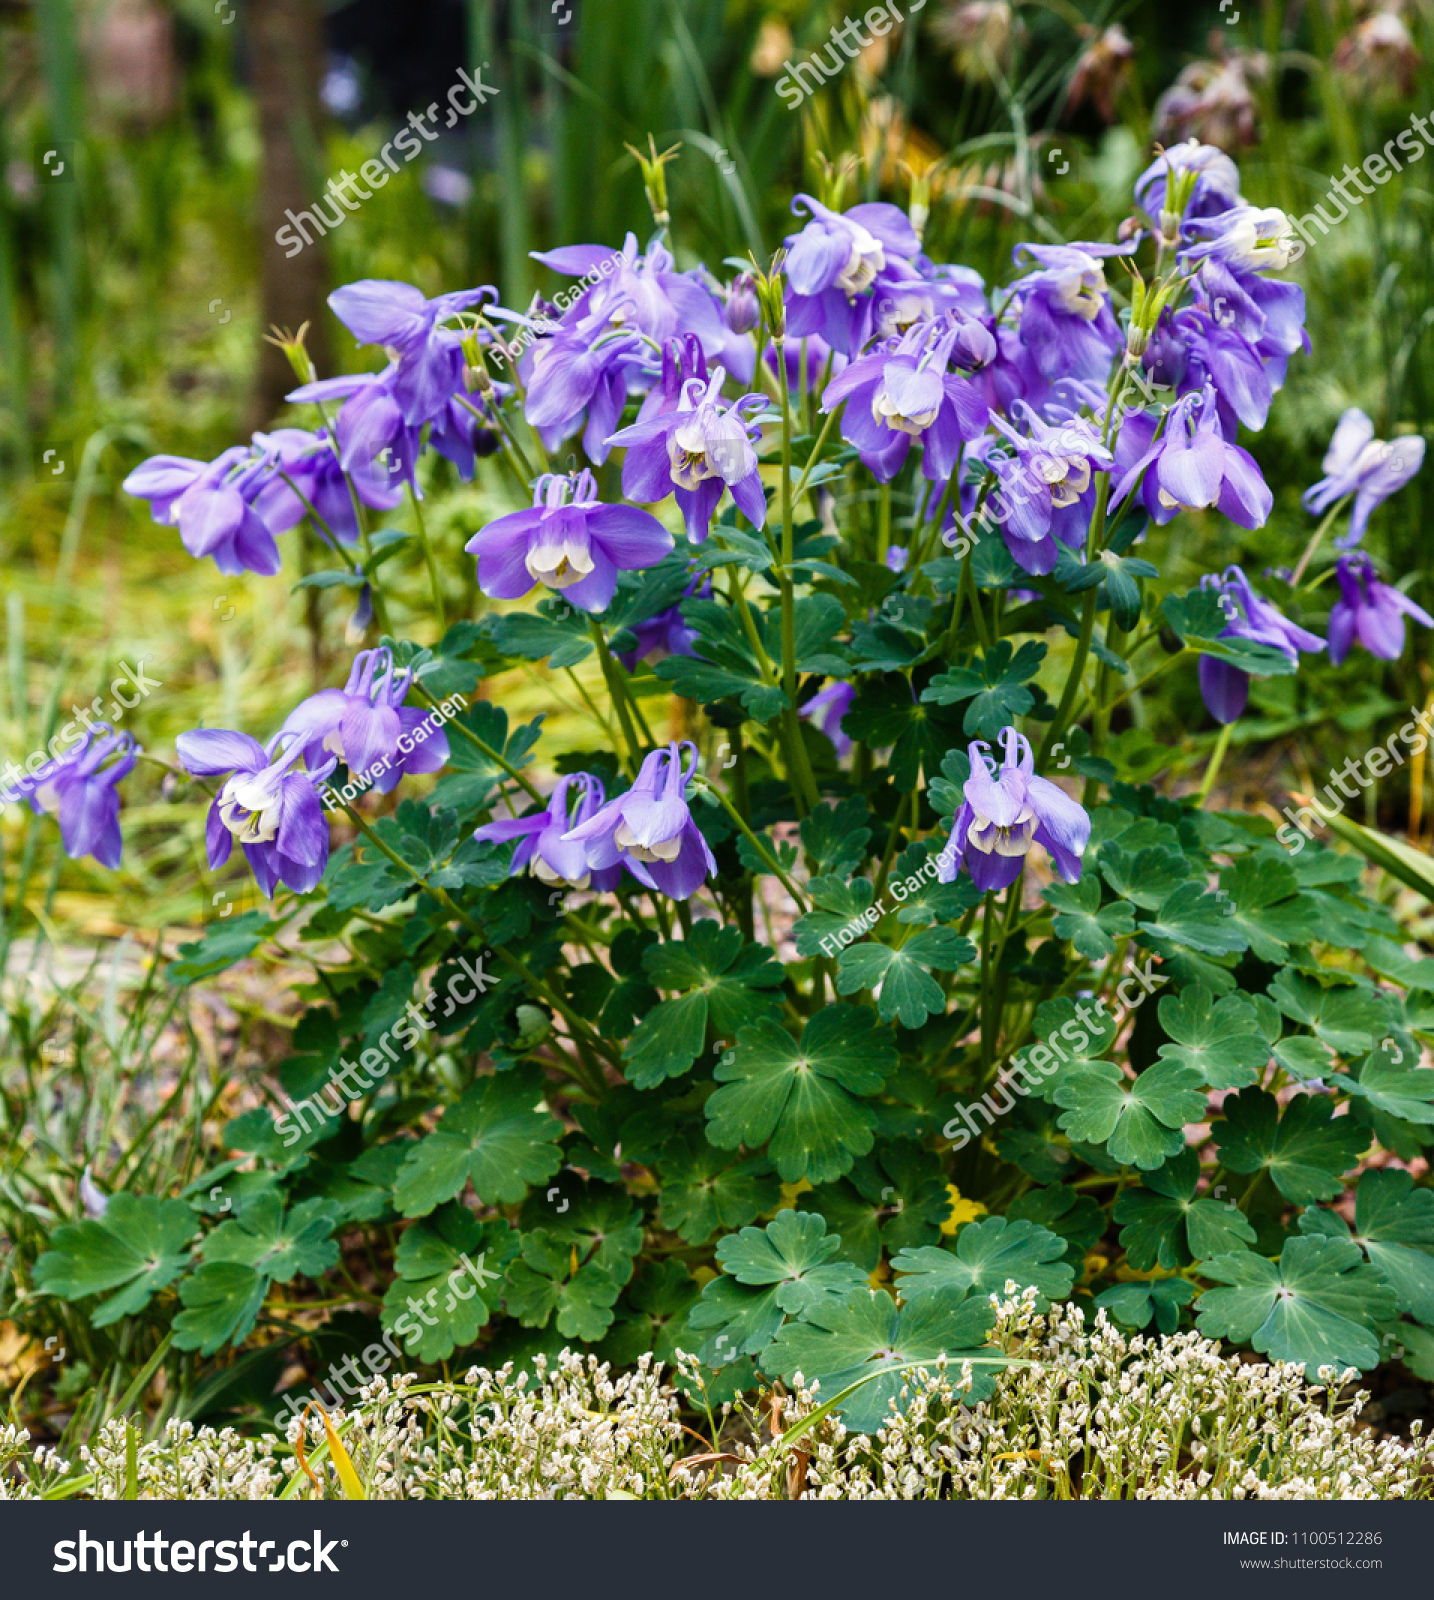 Violet Colorado Blue Columbine Rocky Mountain Nature Stock Image 1100512286